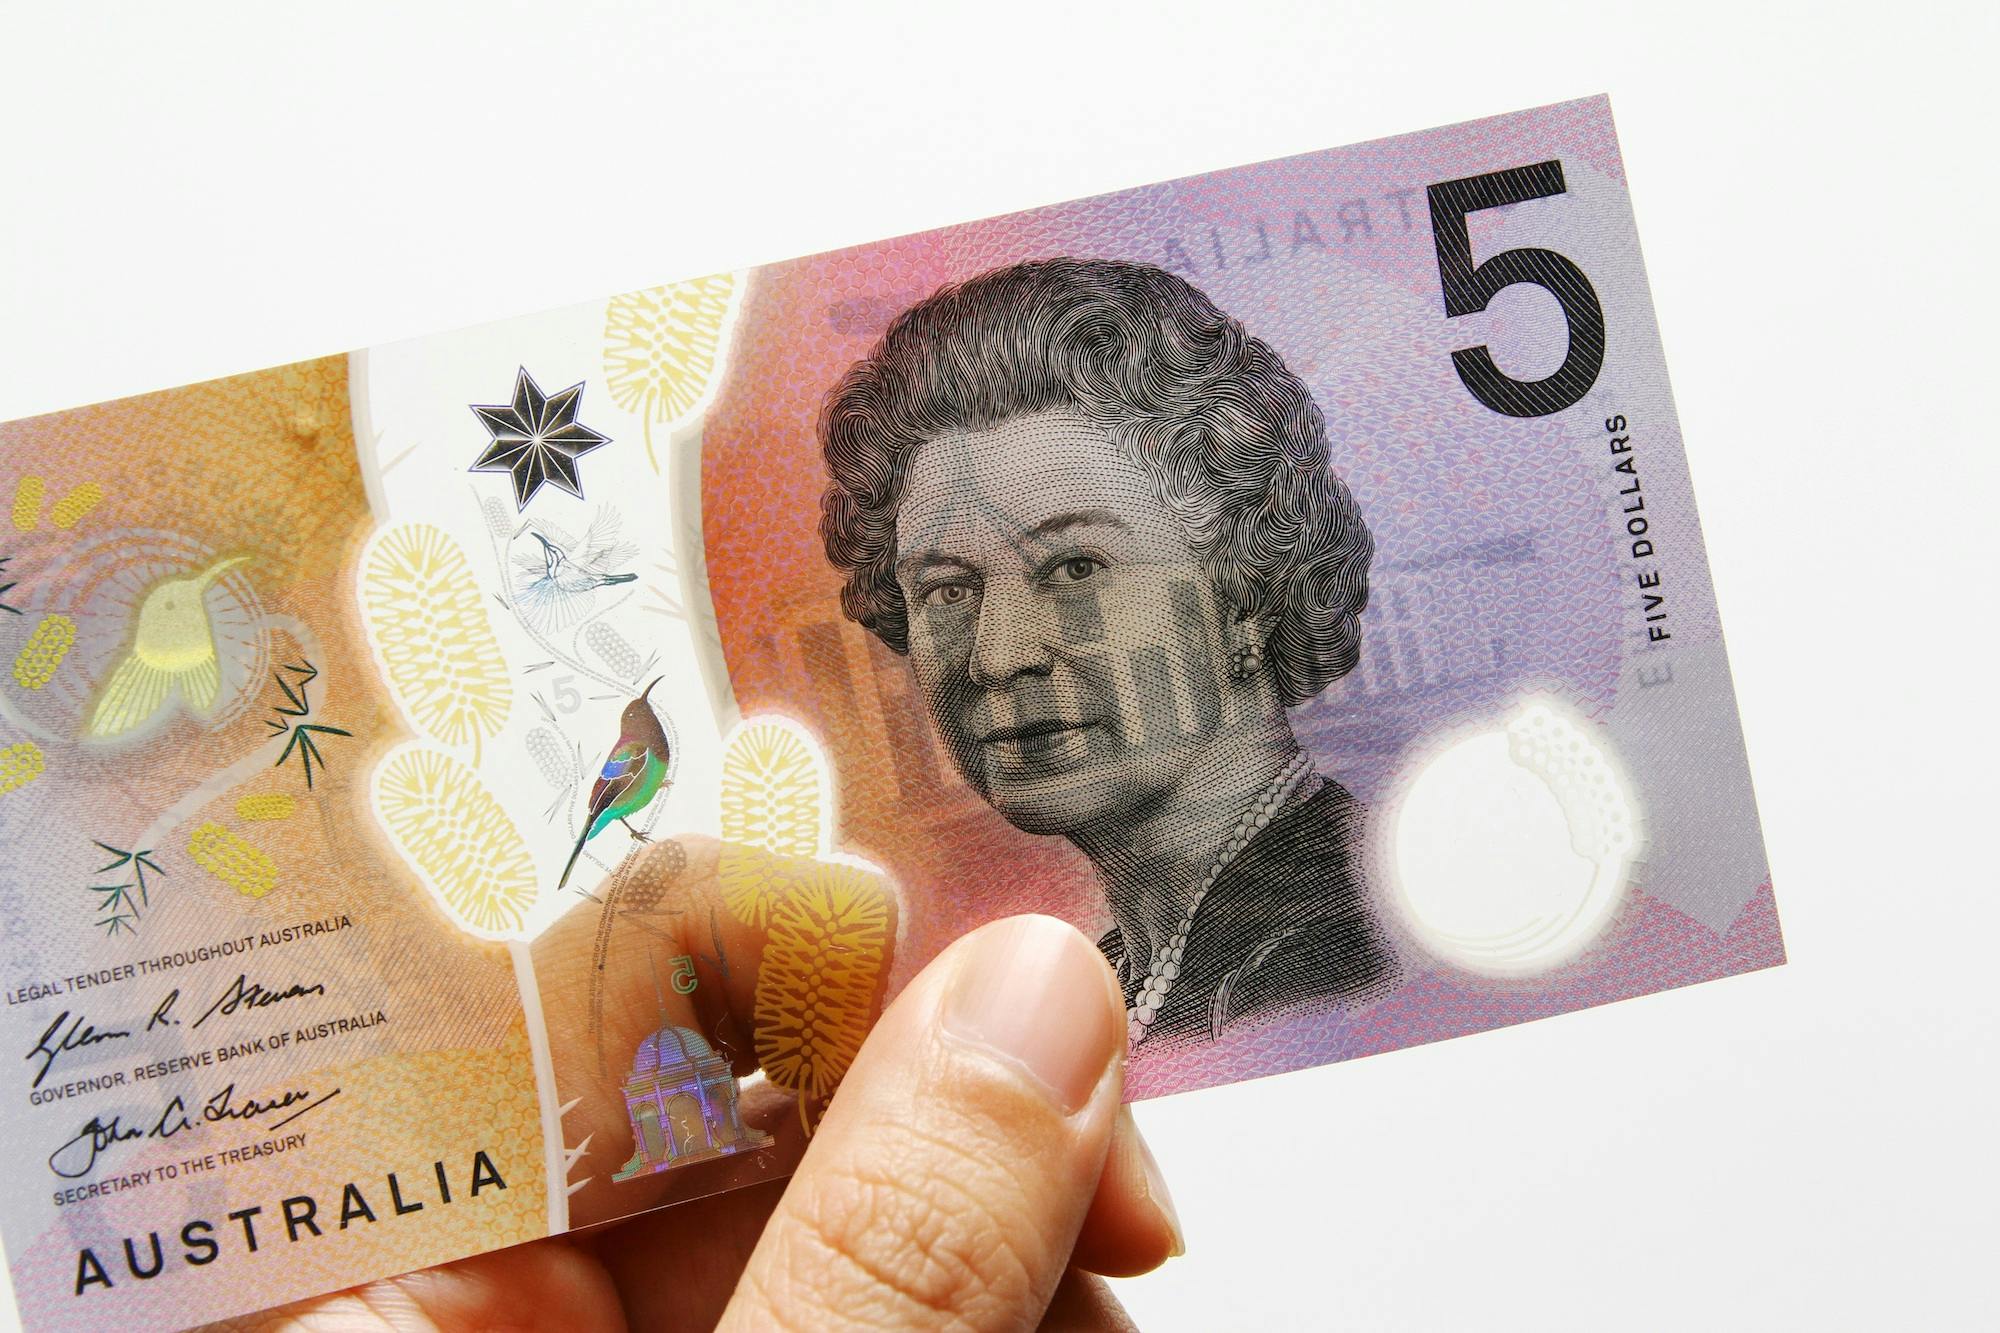 Australian Five Dollar Note To No Longer Feature Royals